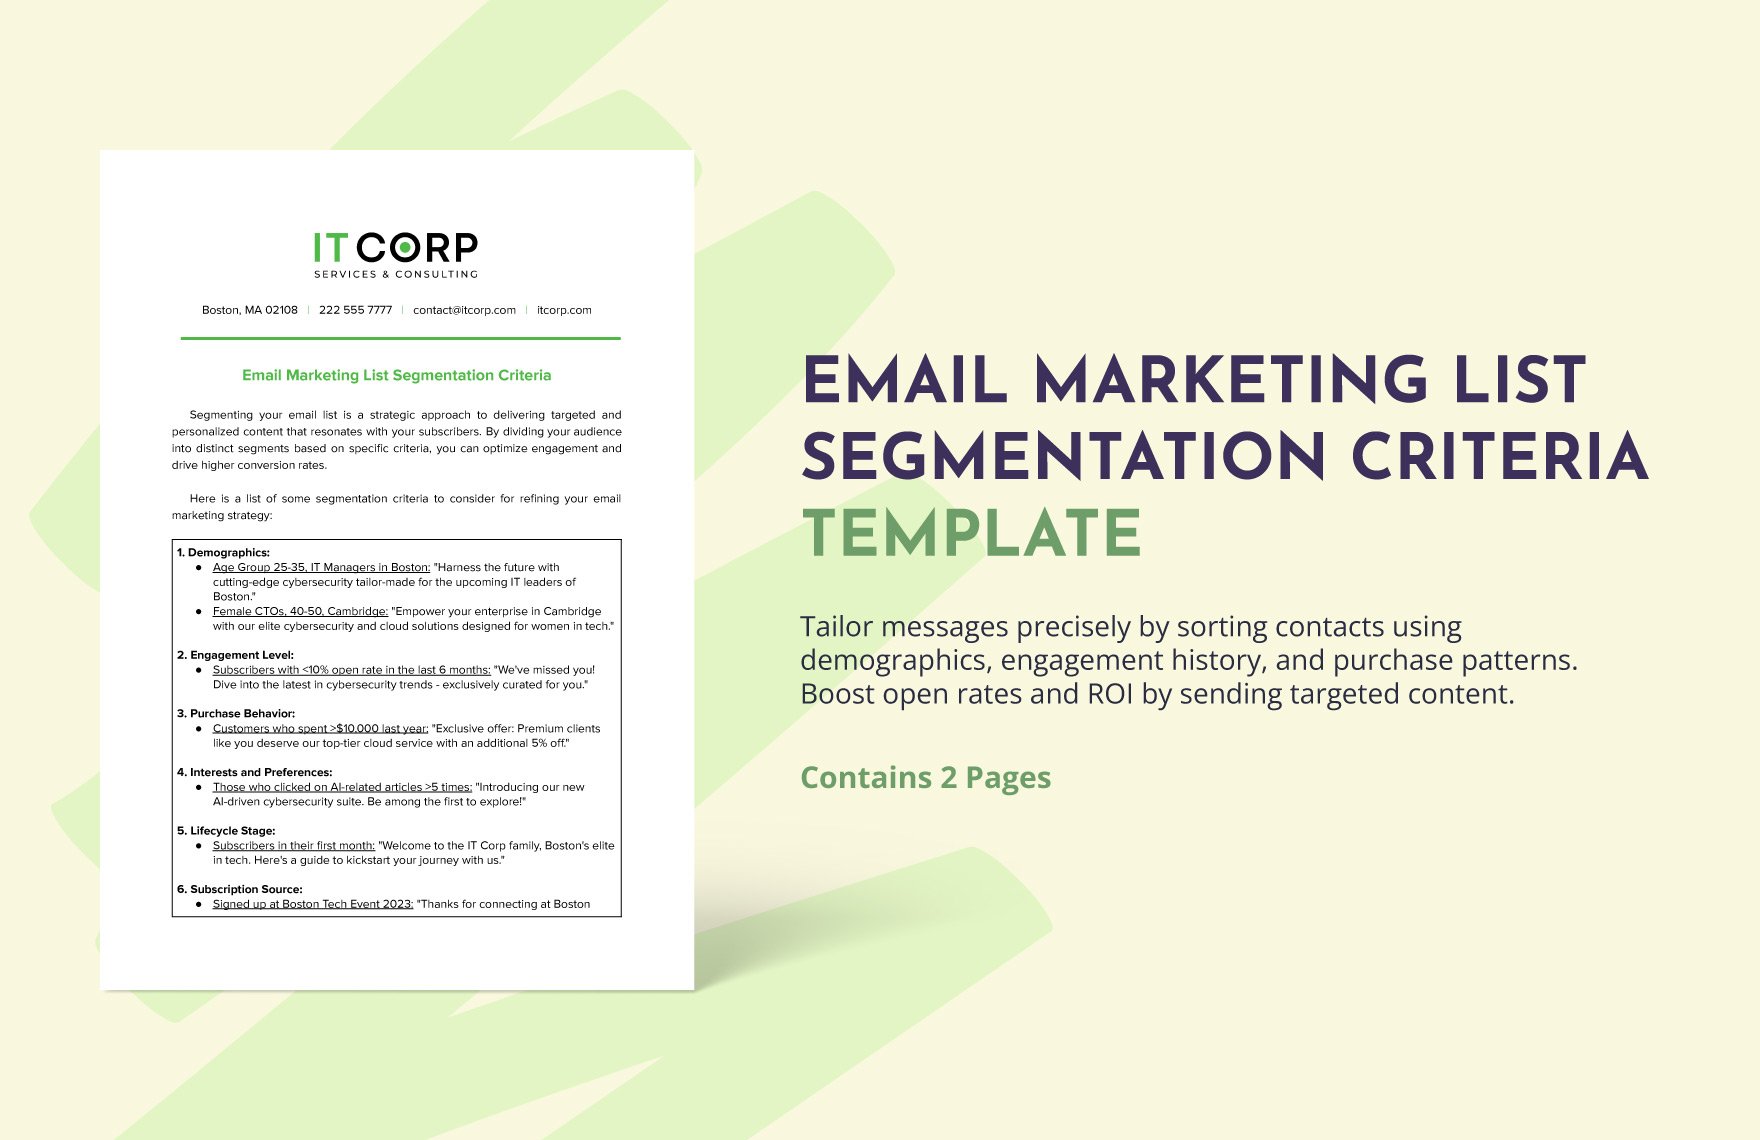 Email Marketing List Segmentation Criteria Template in Word, Google Docs, PDF